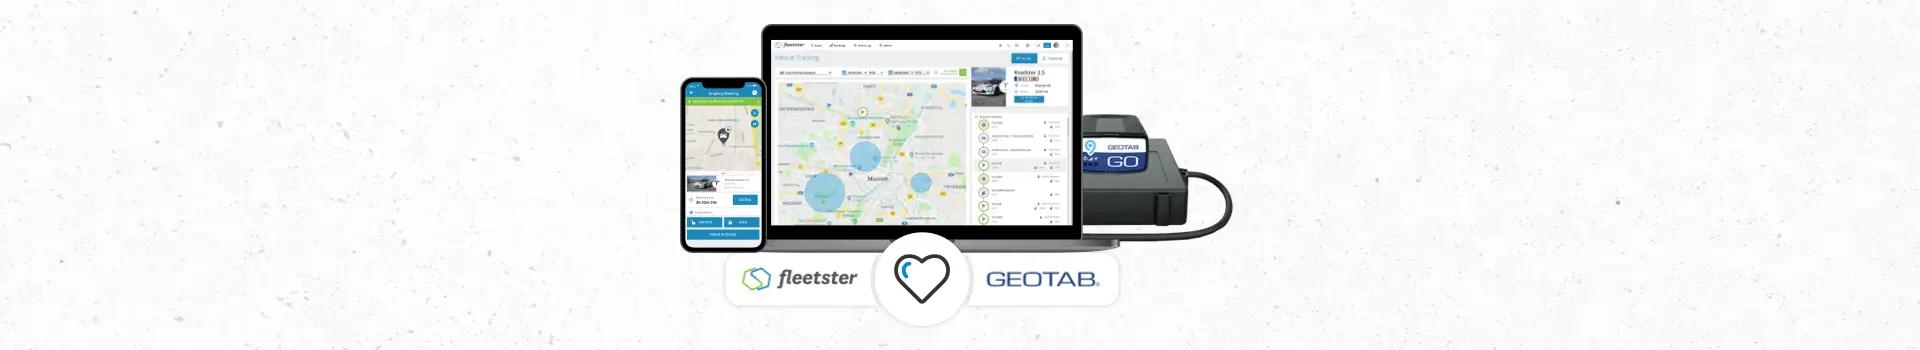 Geotab Keyless integration with fleetster